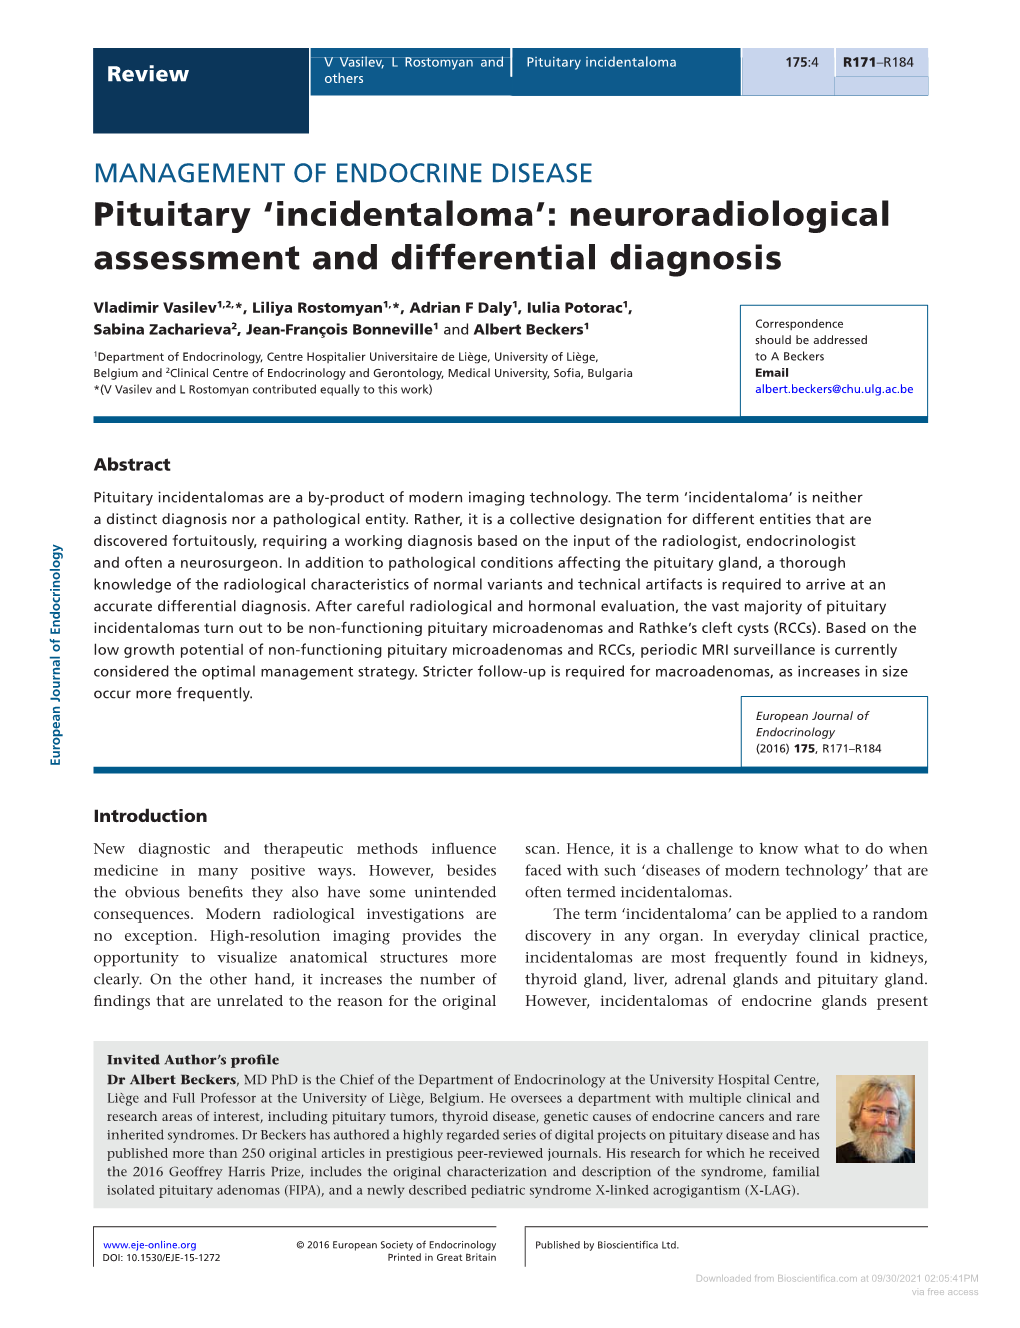 MANAGEMENT of ENDOCRINE DISEASE: Pituitary 'Incidentaloma'